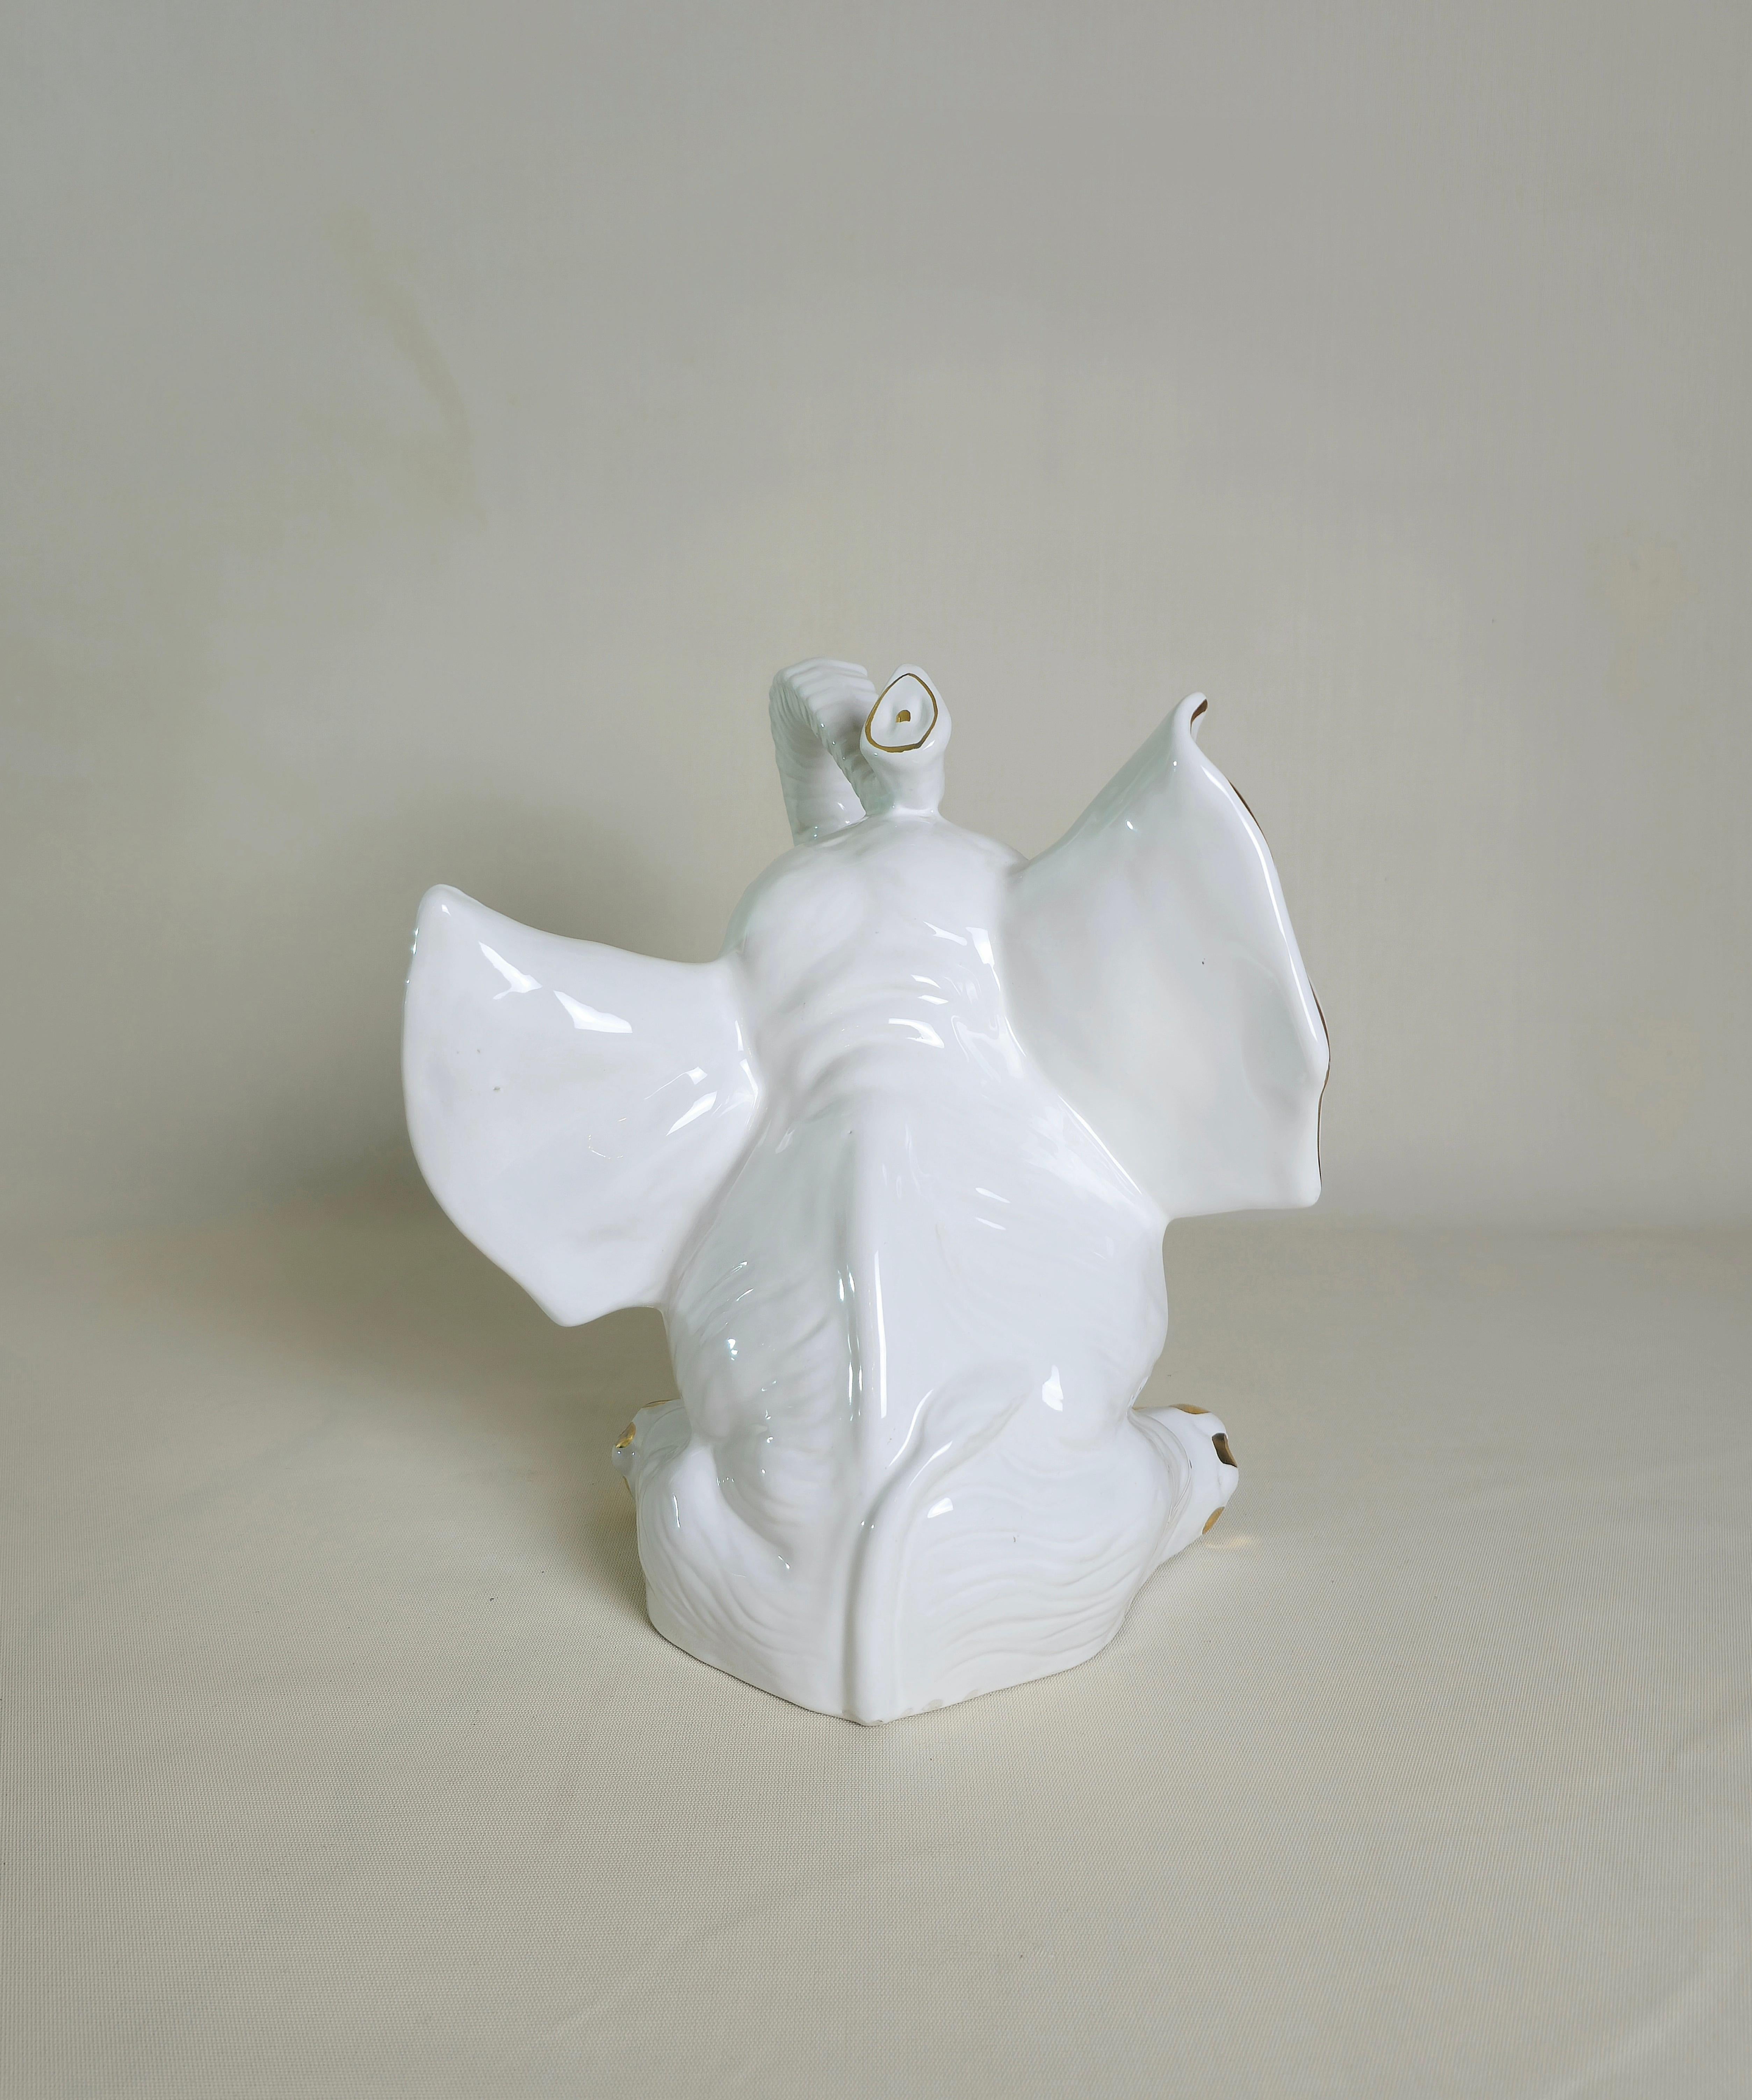 20th Century Decorative Object Elephant Porcelain Midcentury Modern Italian Design 1970s For Sale